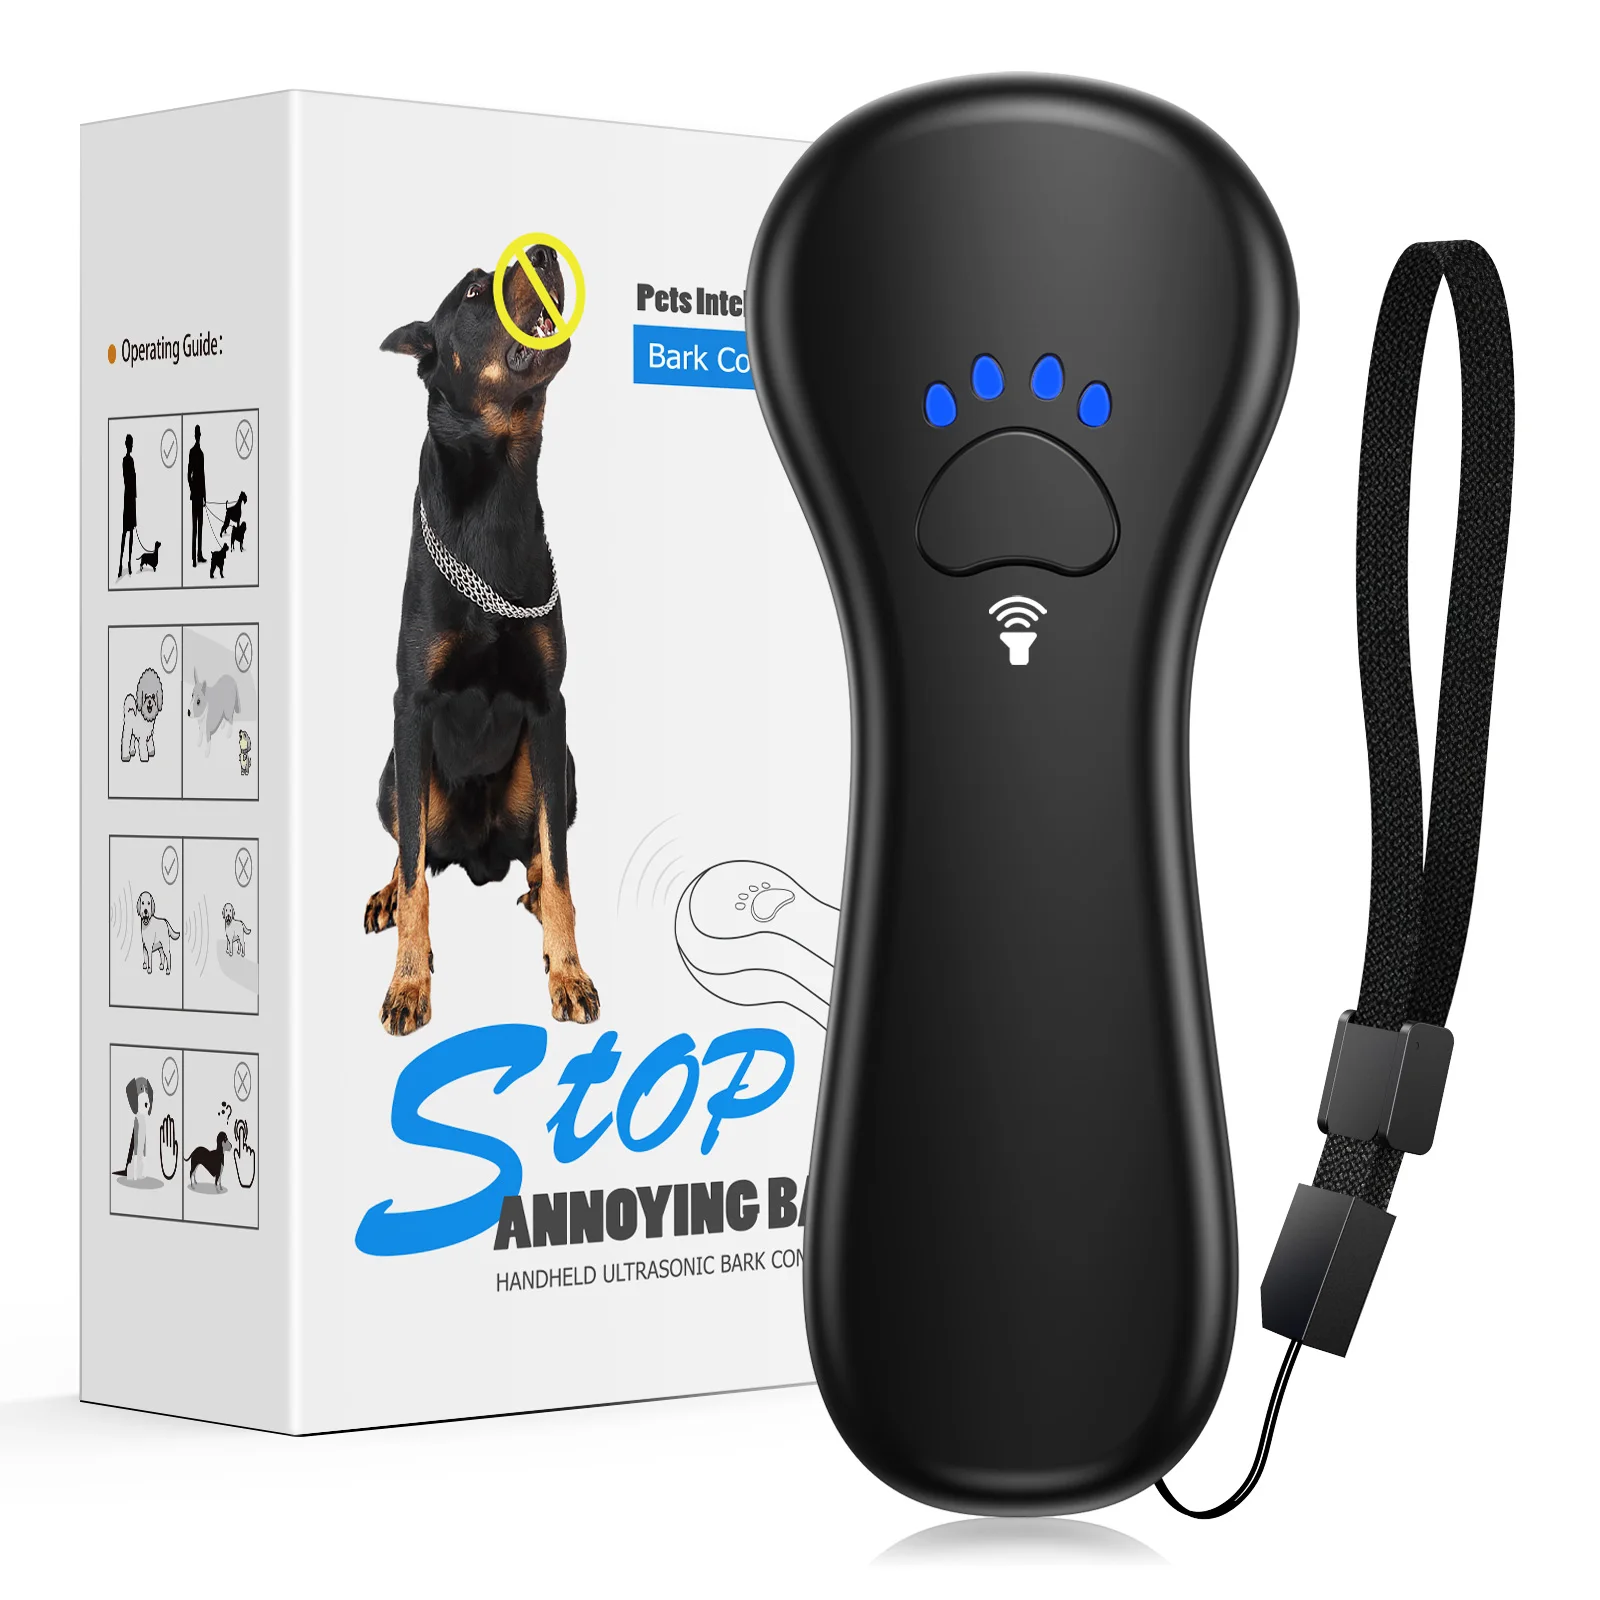 Dog Repeller Dog Barking Control Devices Adjustable Frequencies Ultrasonic Bark Deterrent Up to 16.4 Ft Effective Control Range